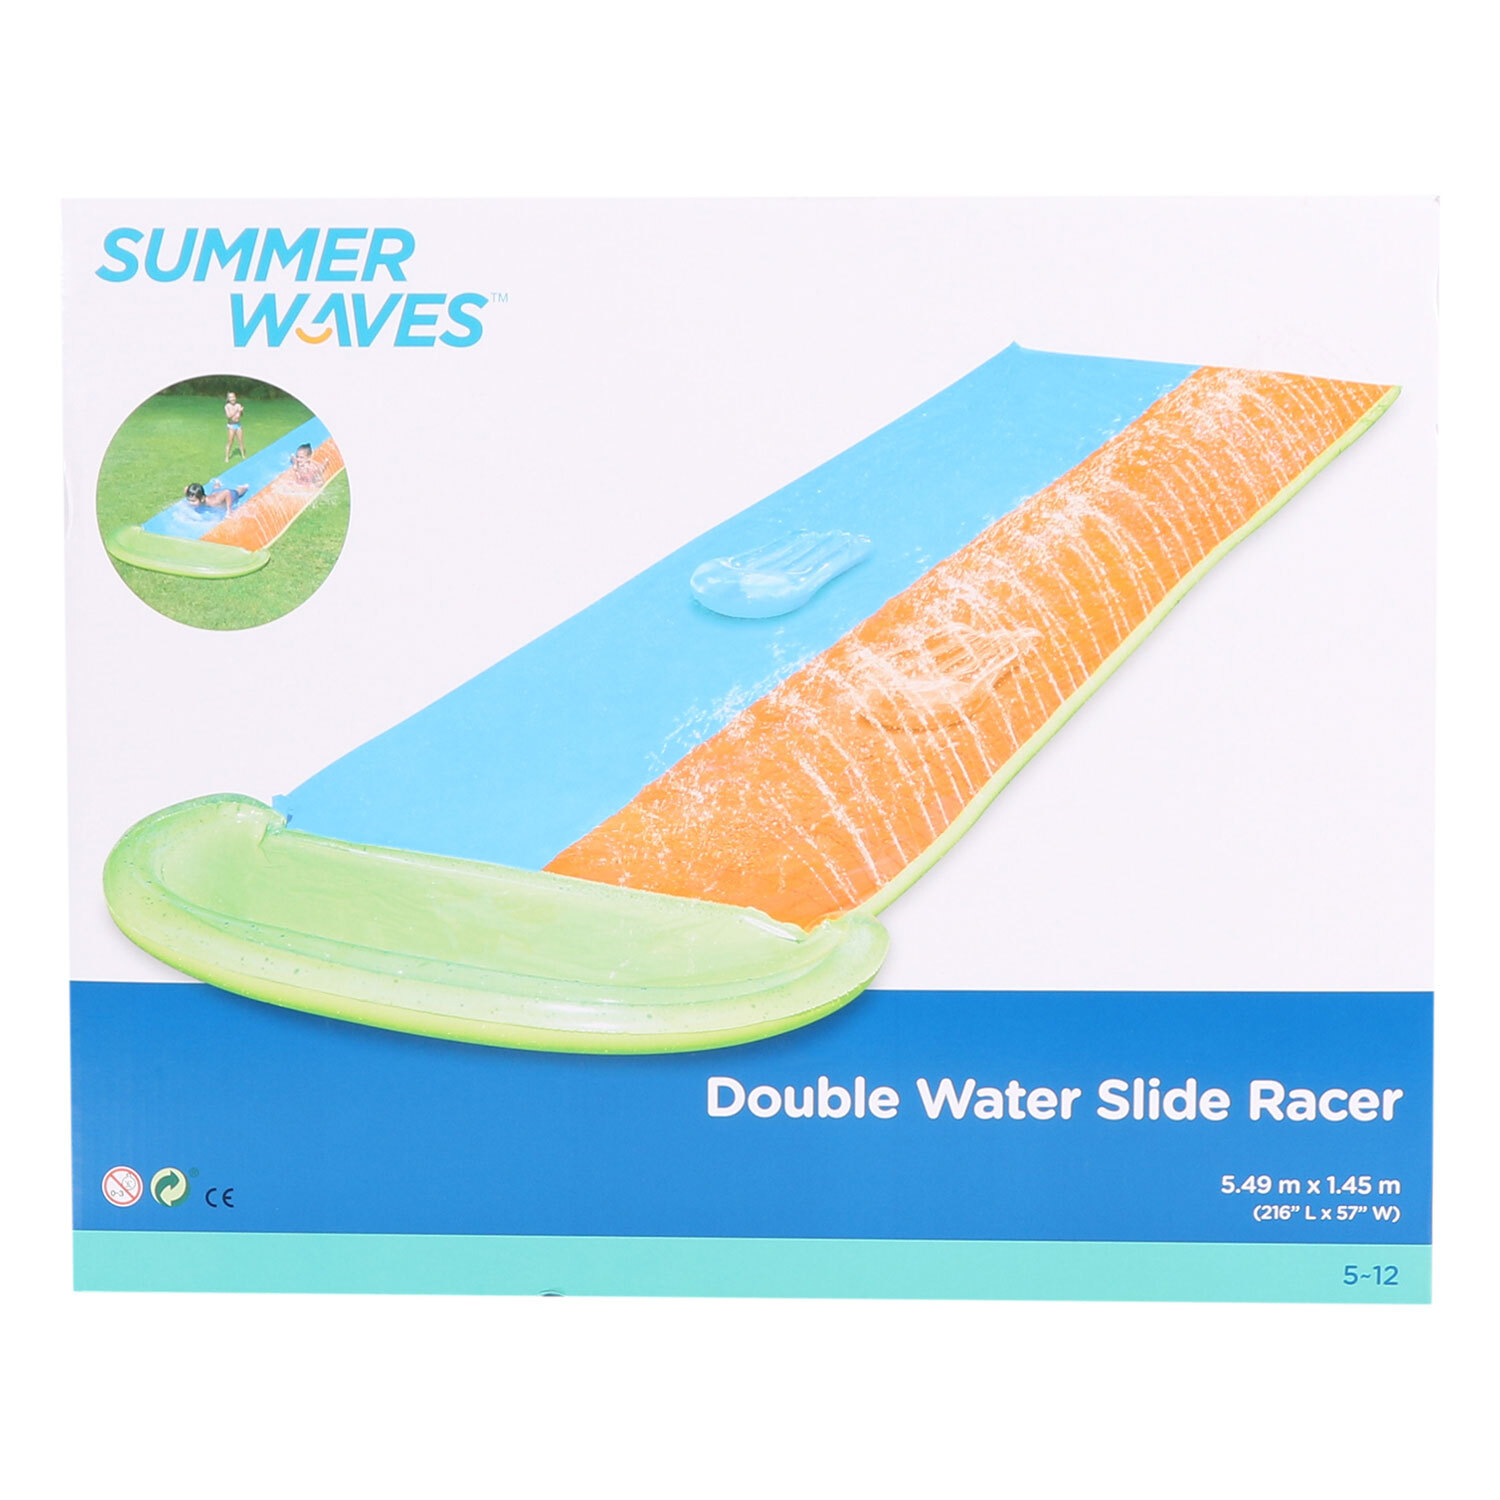 Double Water Slide Racer Image